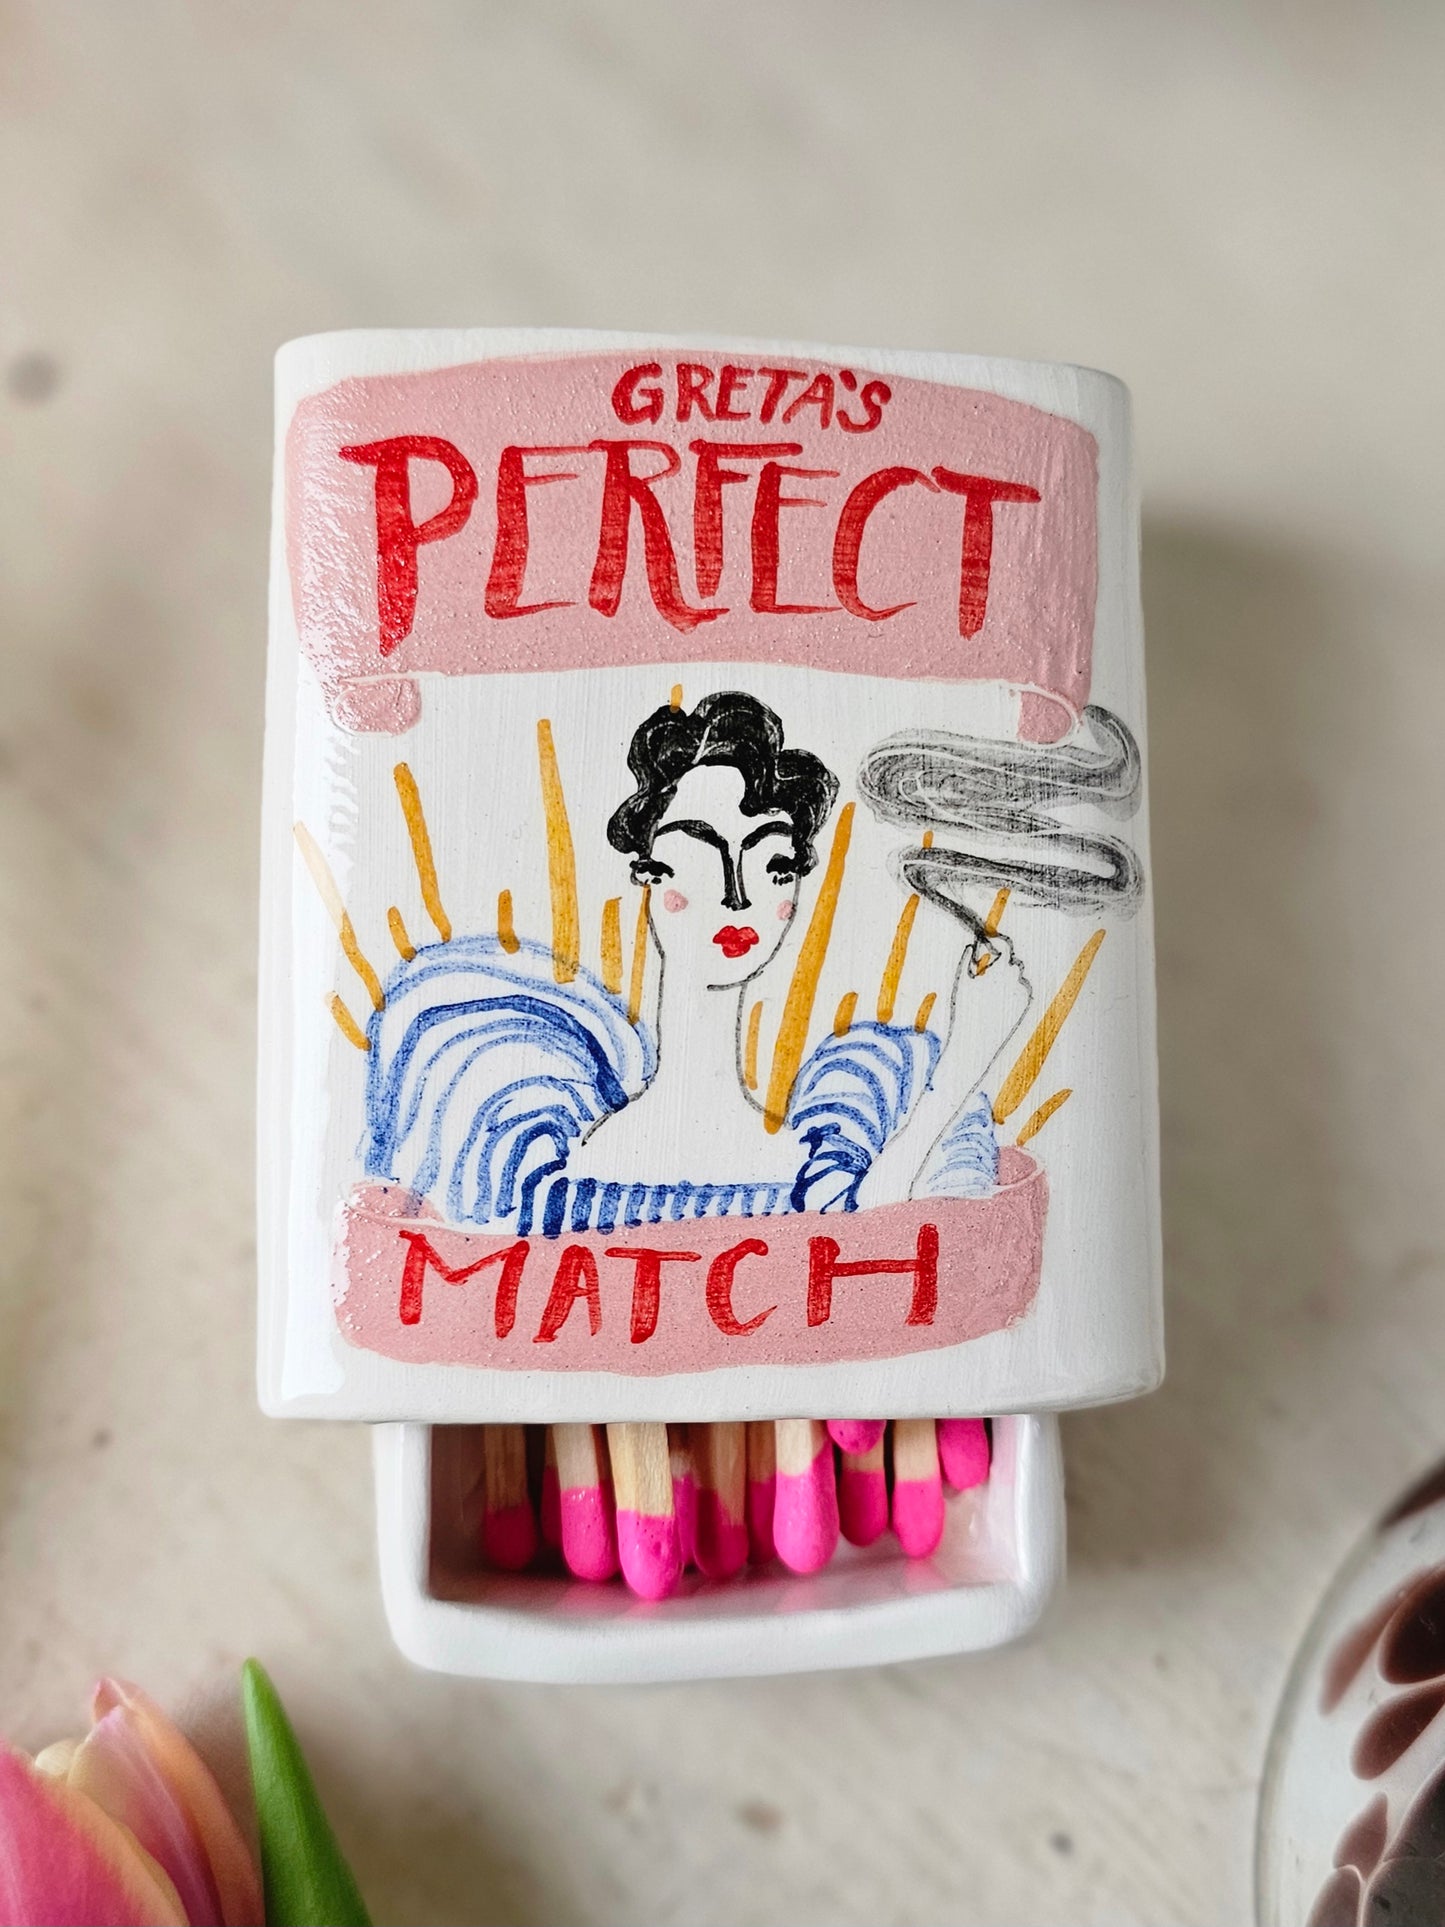 Greta's perfect match ceramic large matchbox